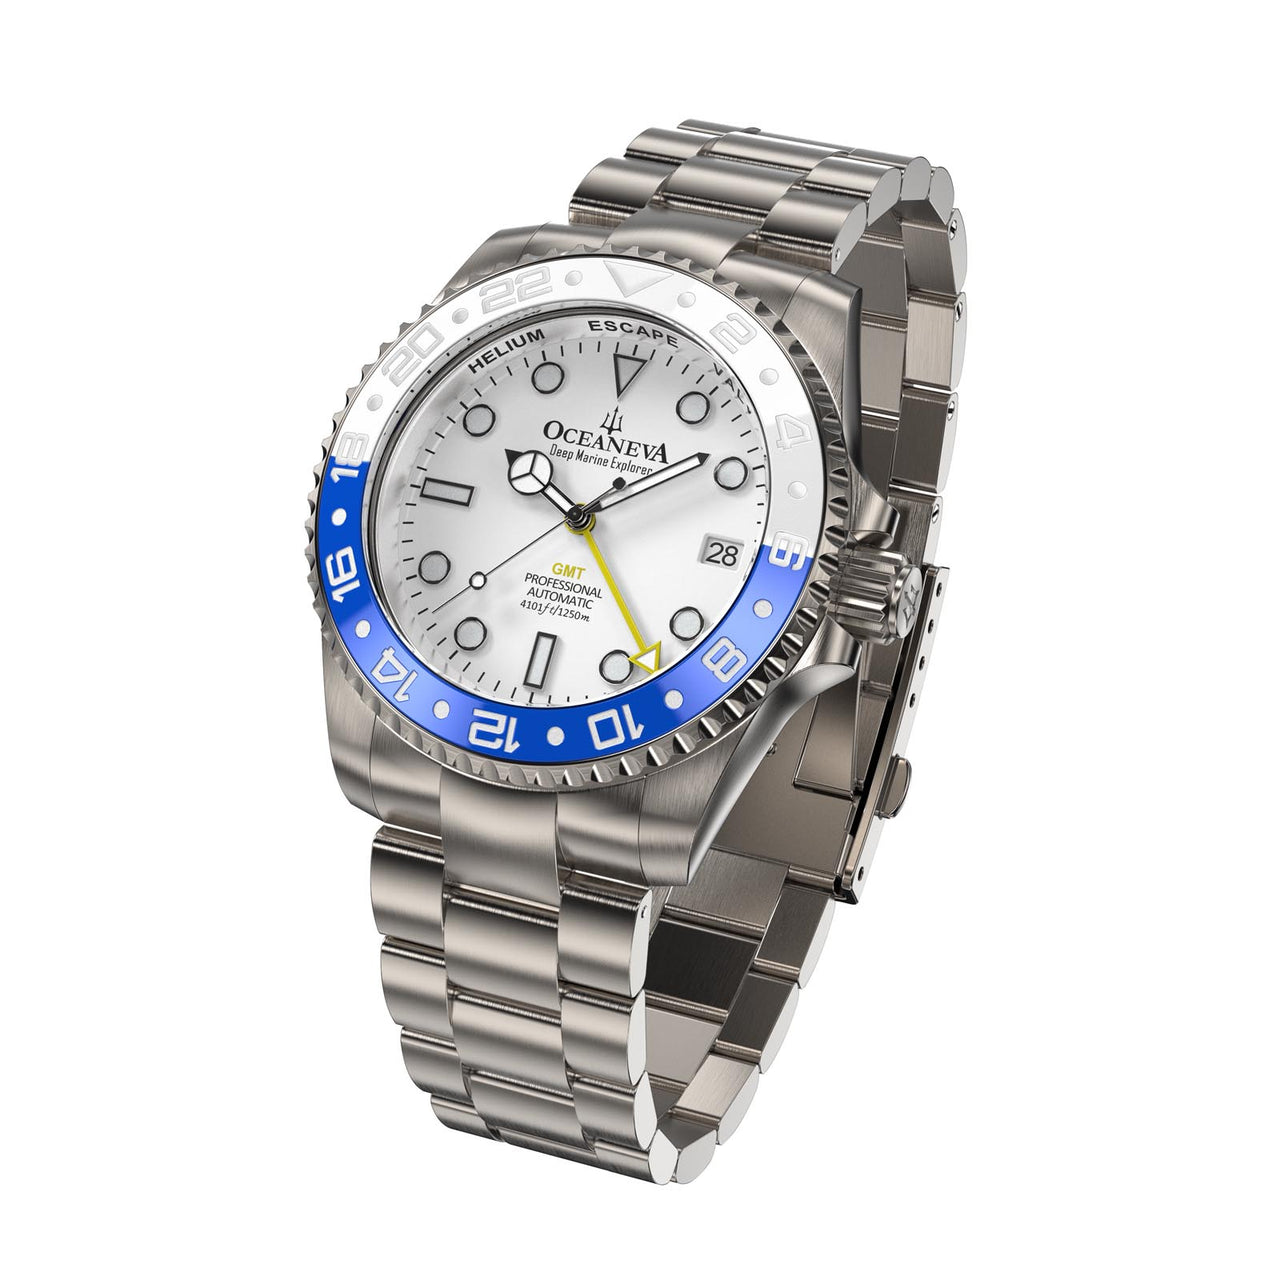 Oceaneva Titanium Watch featuring 4-year international warranty assurance